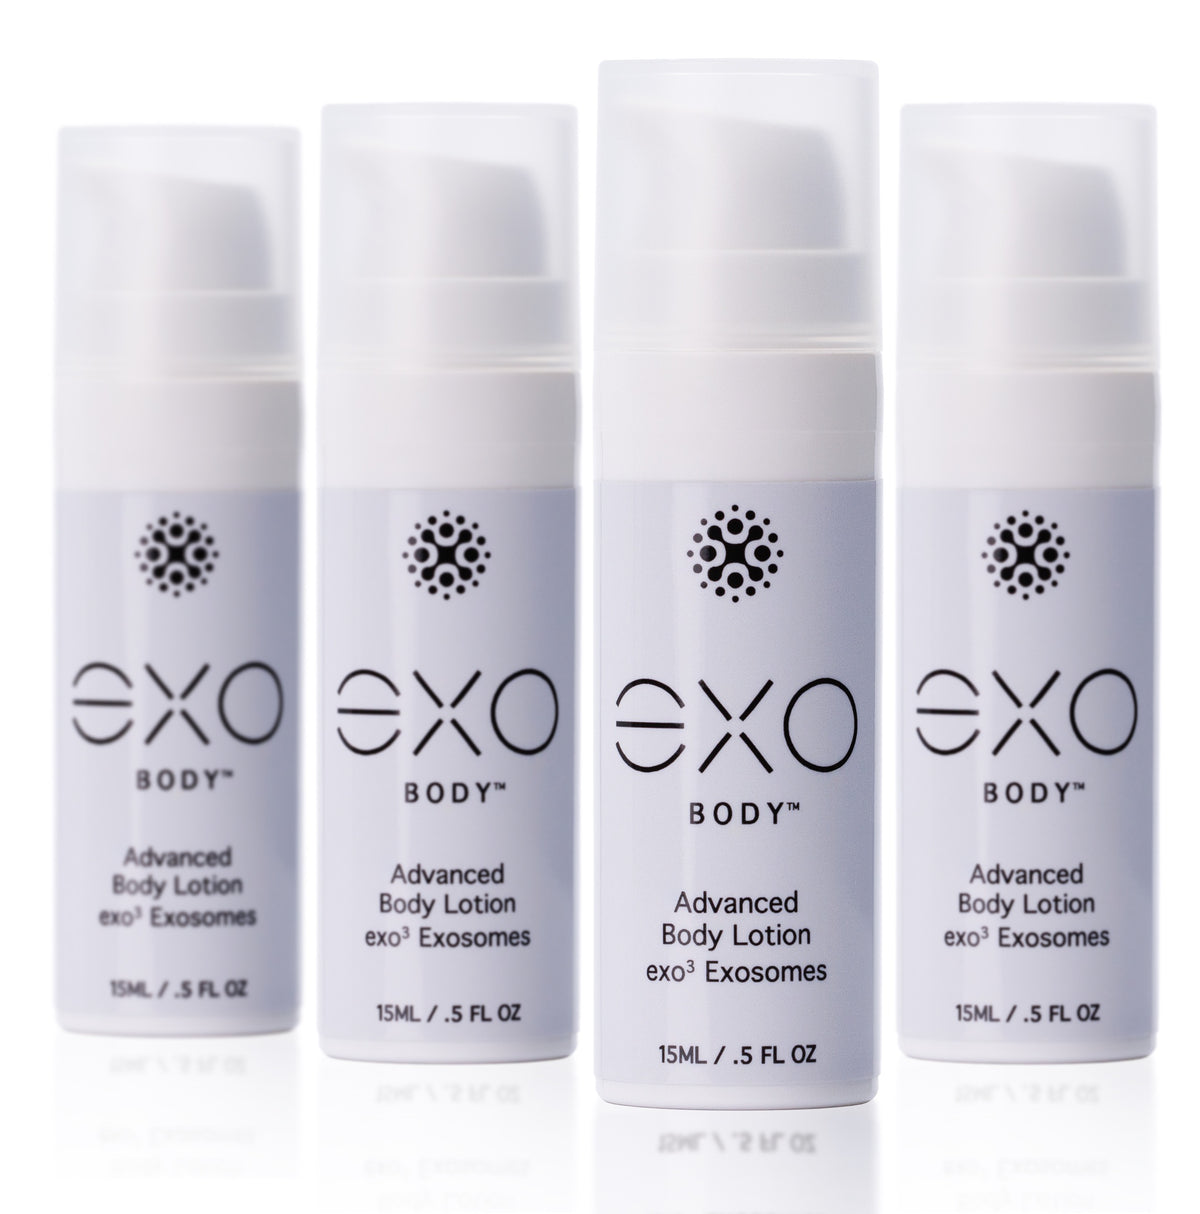 EXO BODY™ - Advanced Body Lotion - Travel Size, 4 bottles - 15ML / .5 fl oz (x4)